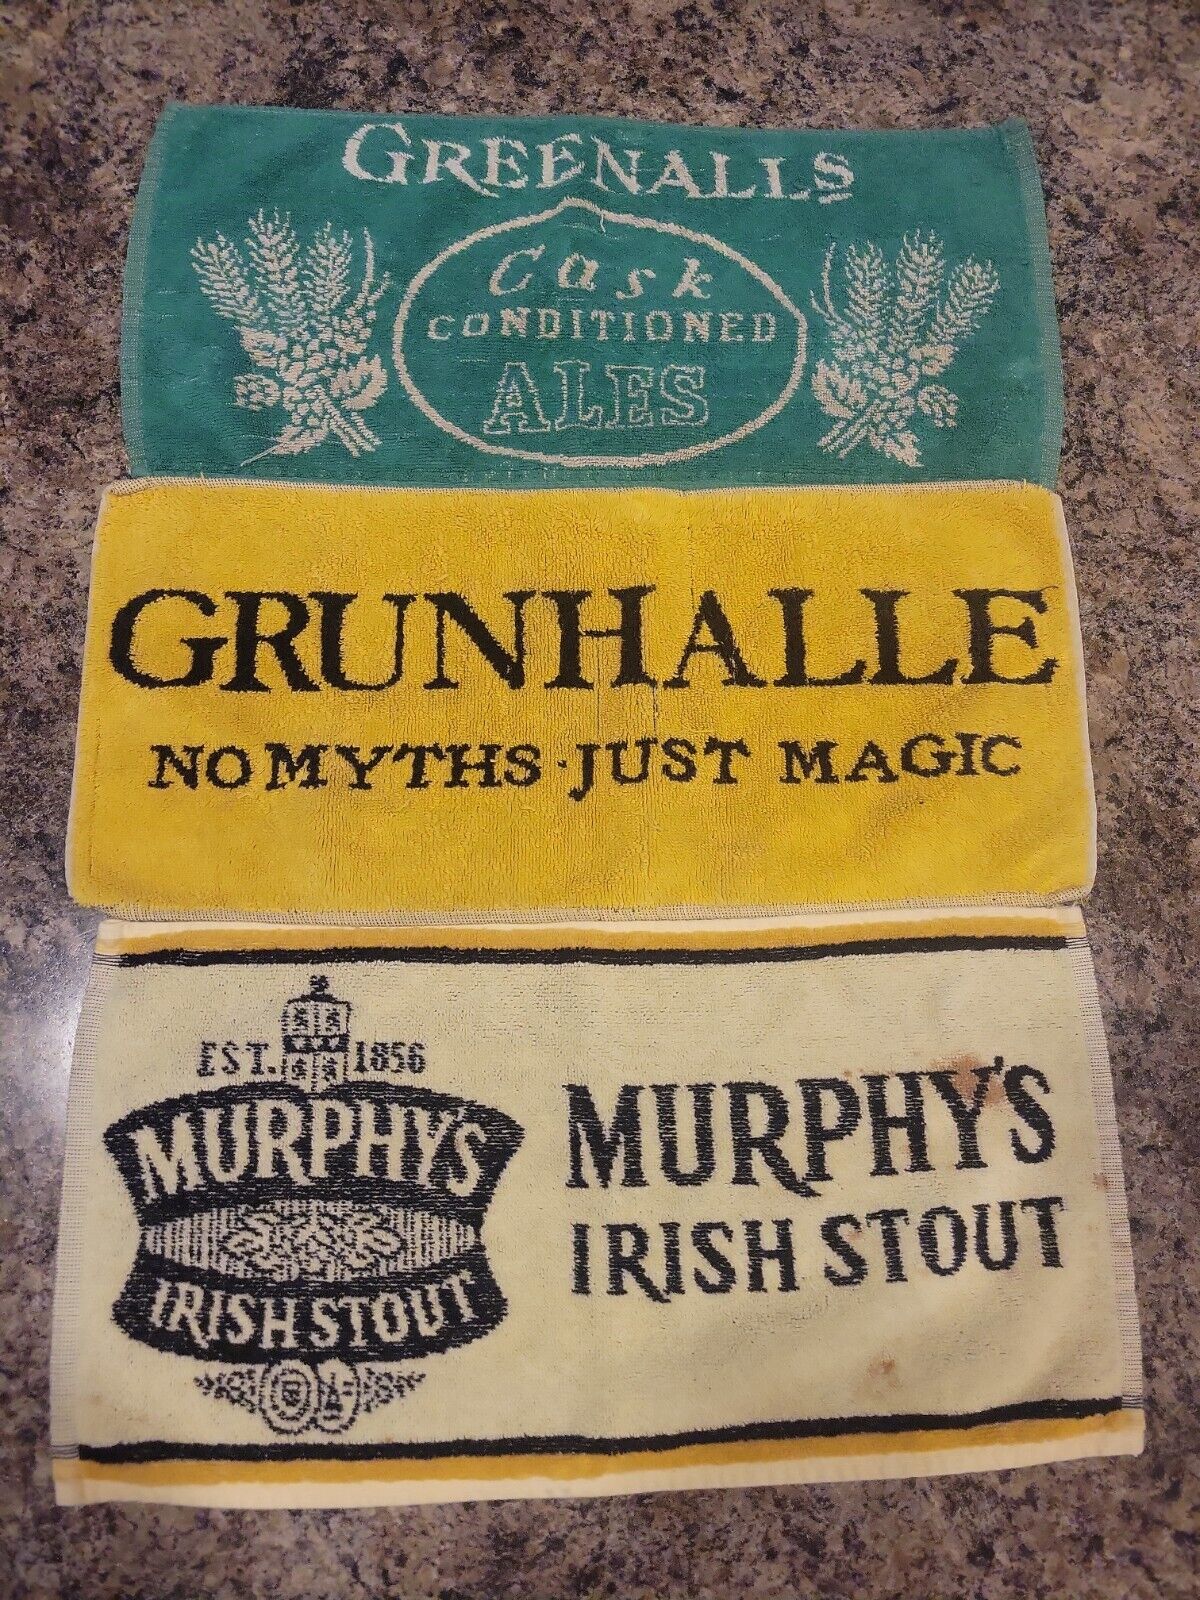 Greenalls Murphys Irish Stout Grunhalle Bar Towels Pub Beer Vintage Advertising